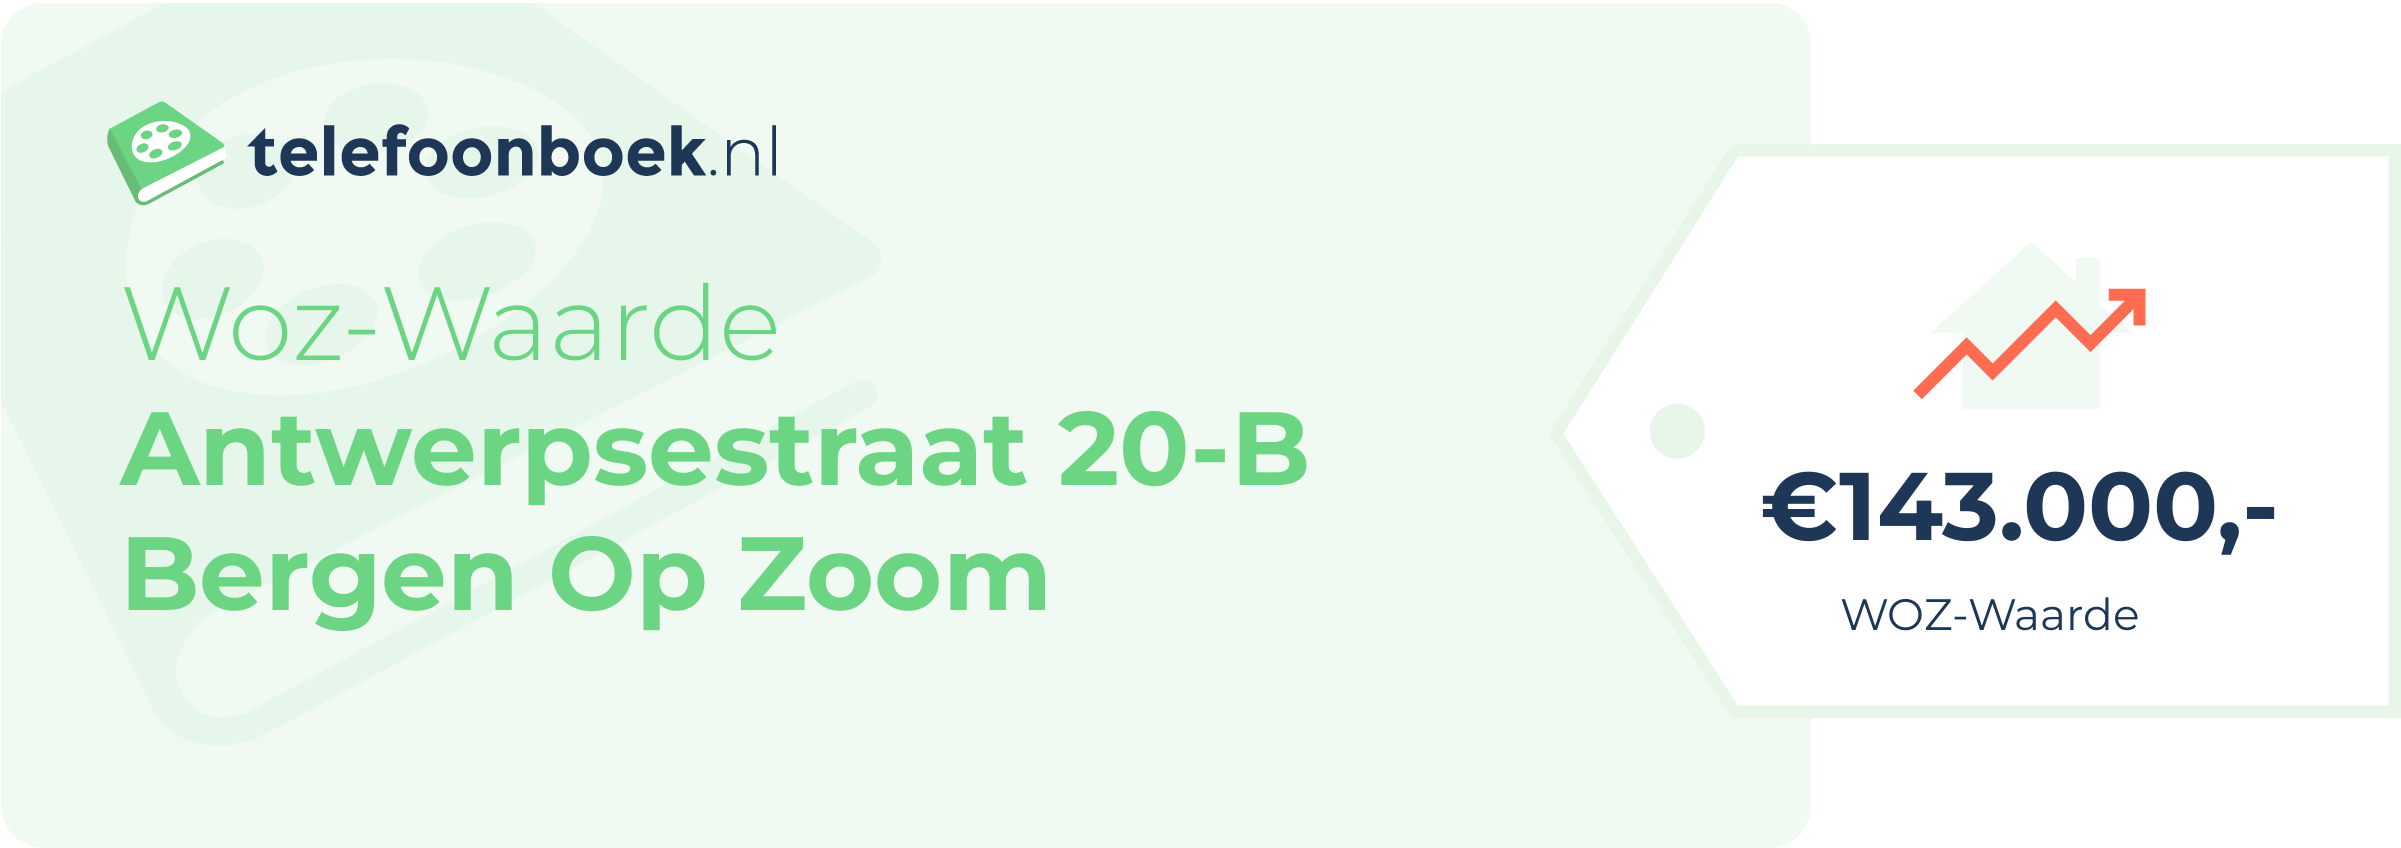 WOZ-waarde Antwerpsestraat 20-B Bergen Op Zoom